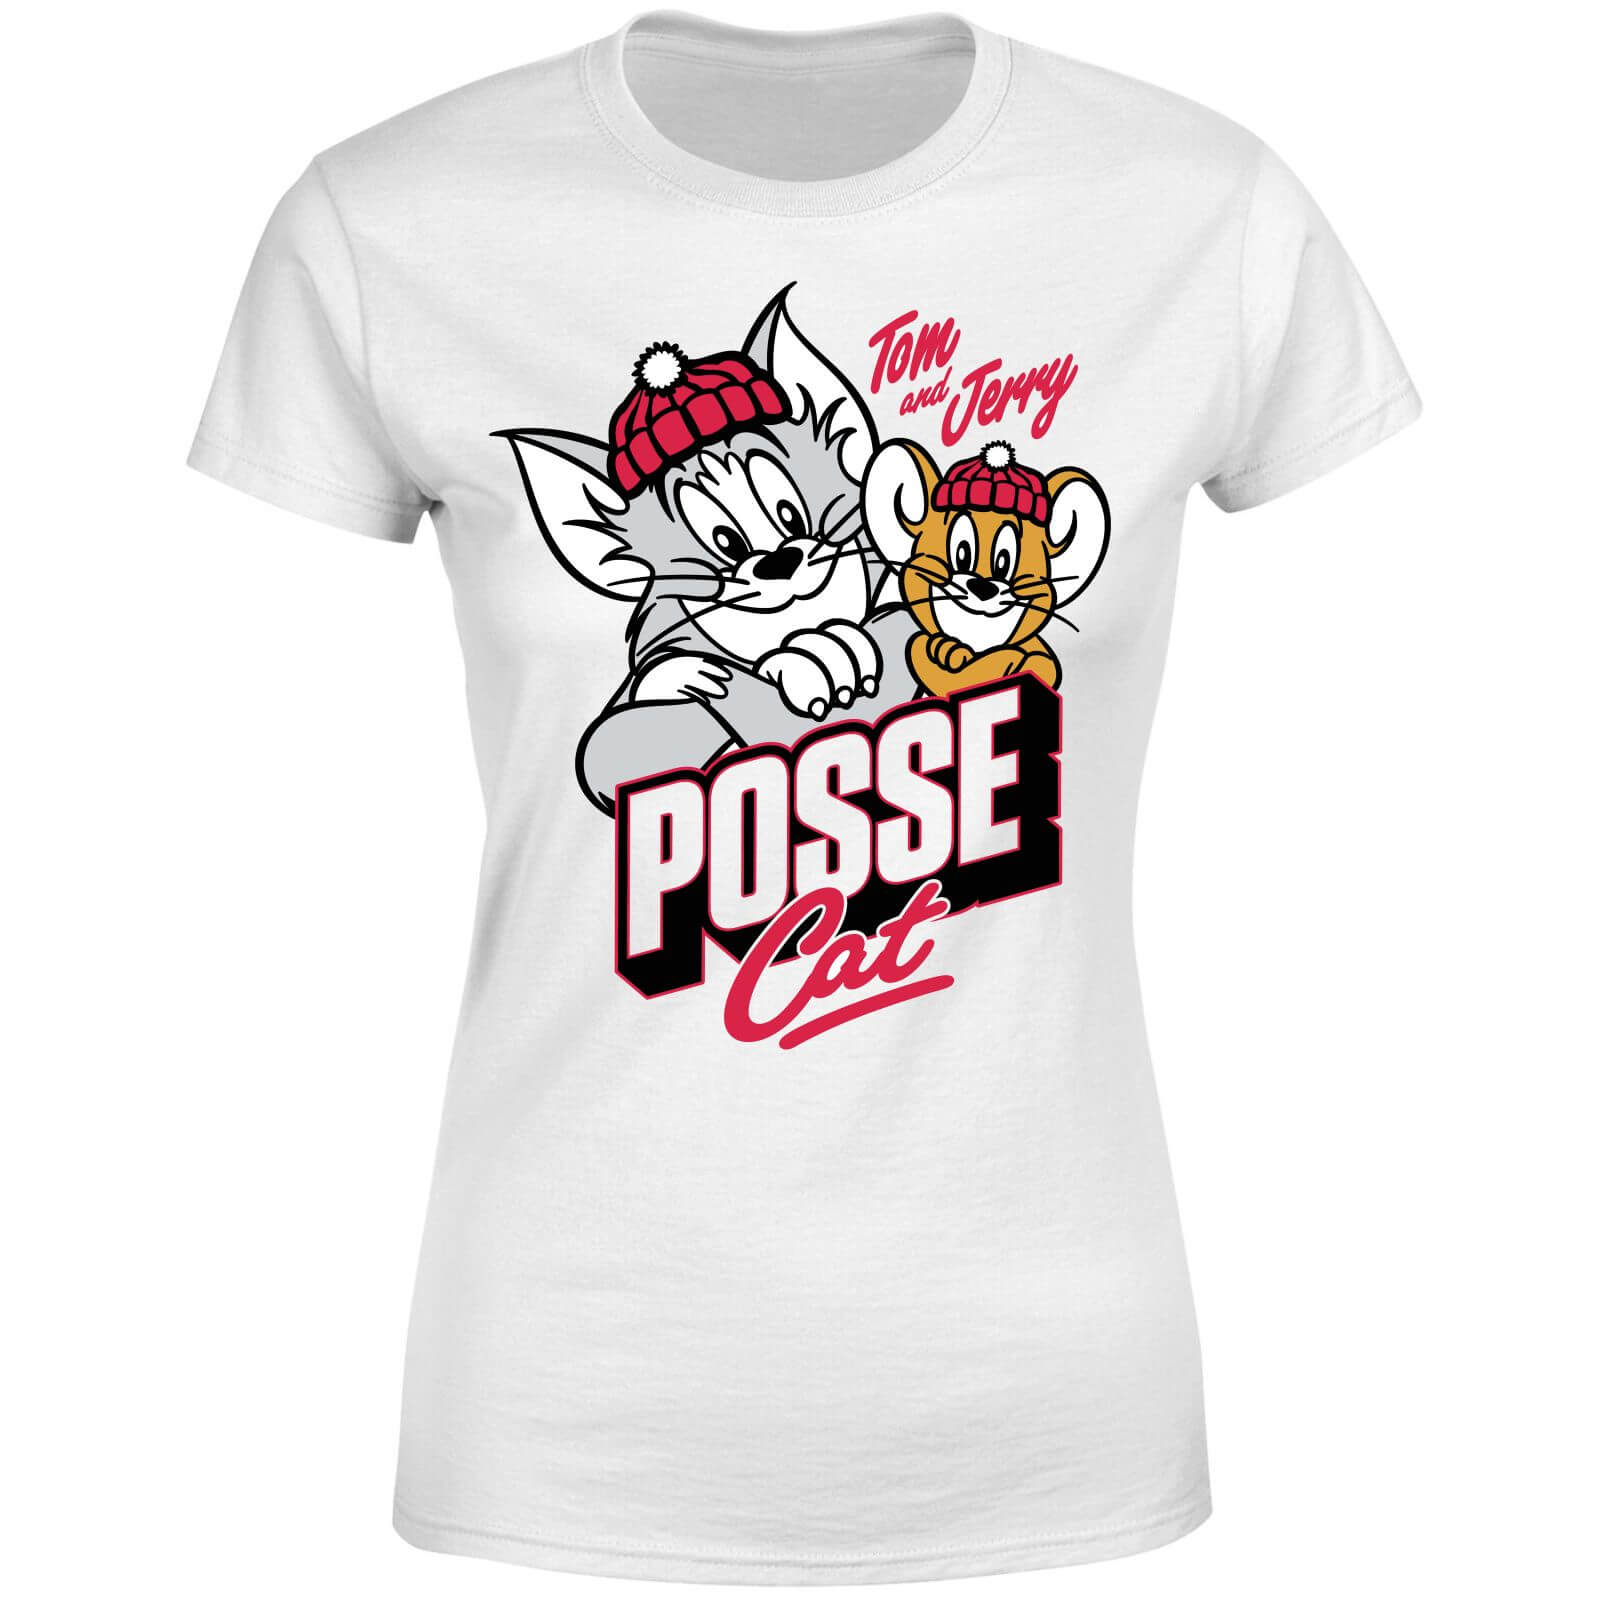 Tom & Jerry Posse Cat Women's T-Shirt - White - 4XL - White